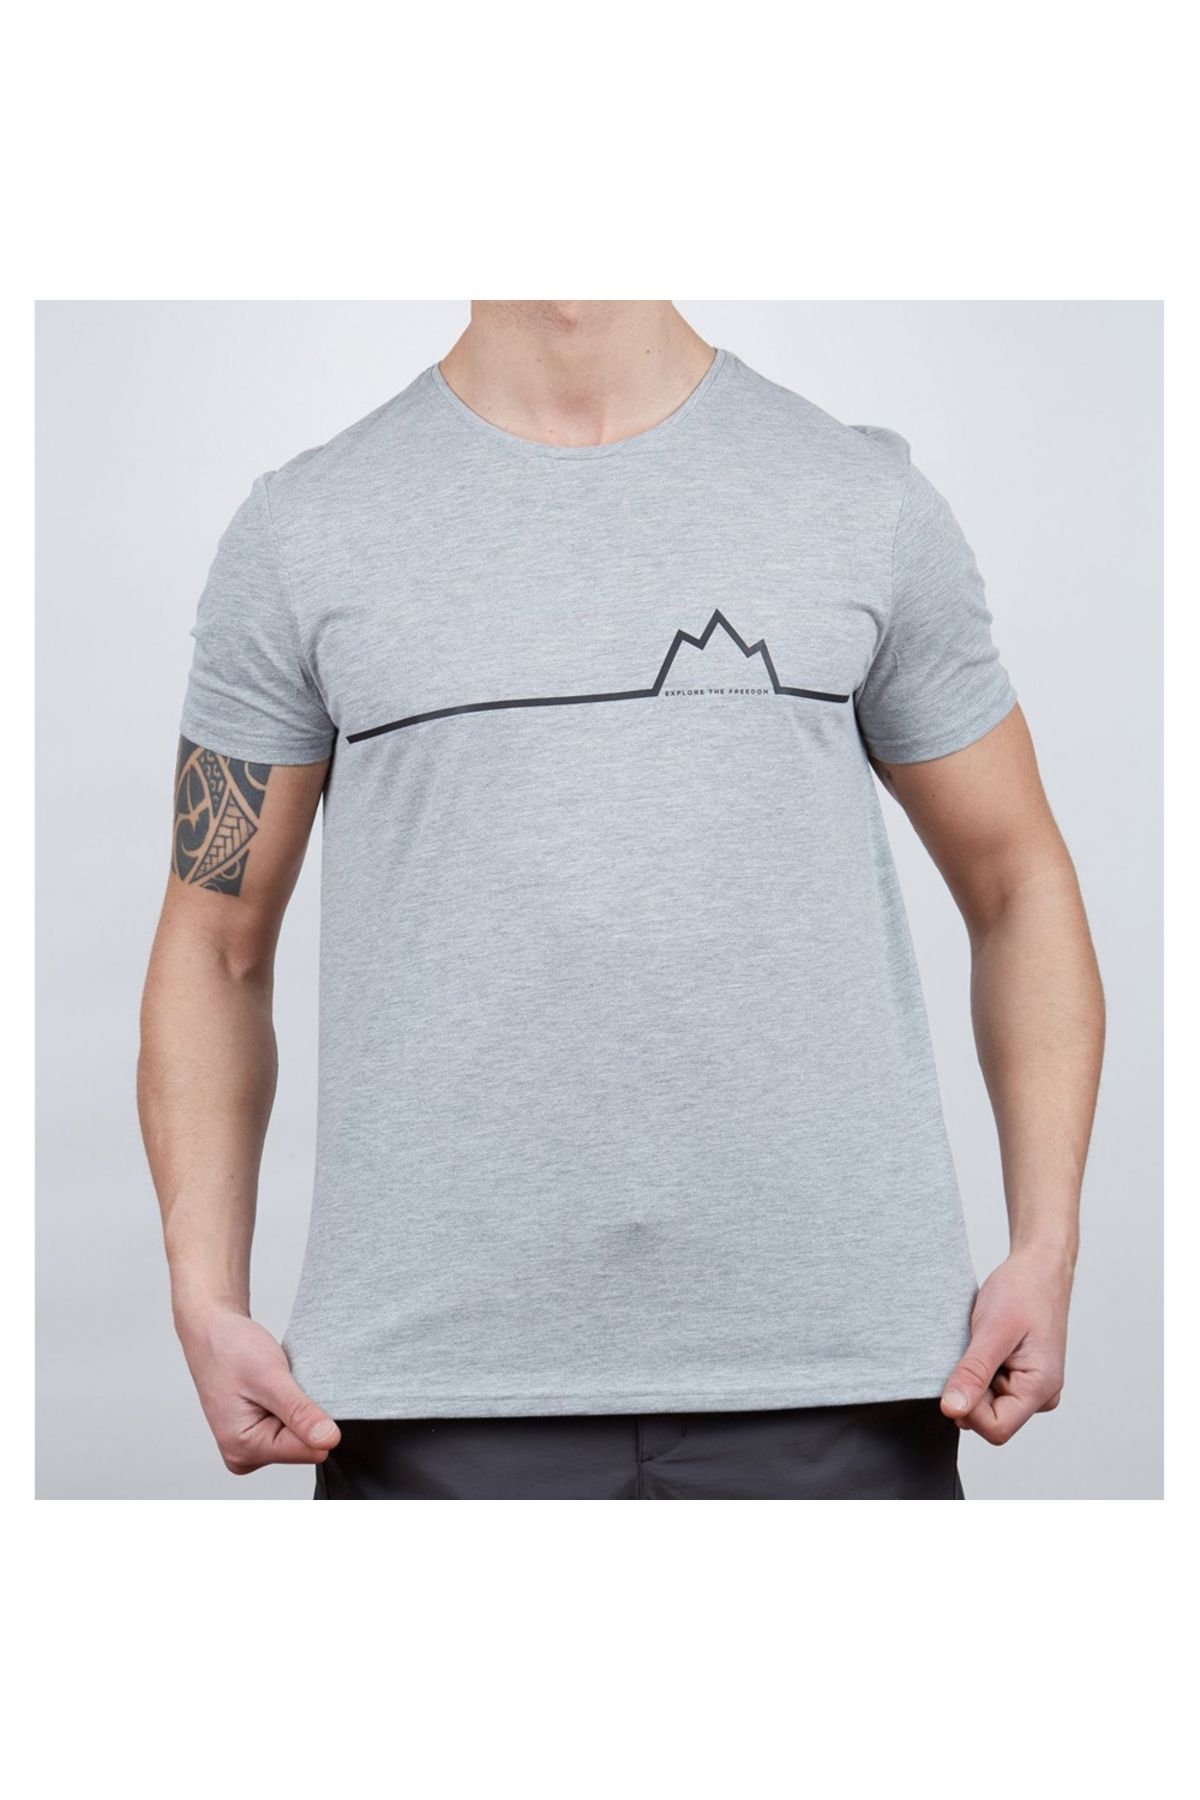 Alpinist Nordic Erkek T-shirt Gri Melanj L (600609)